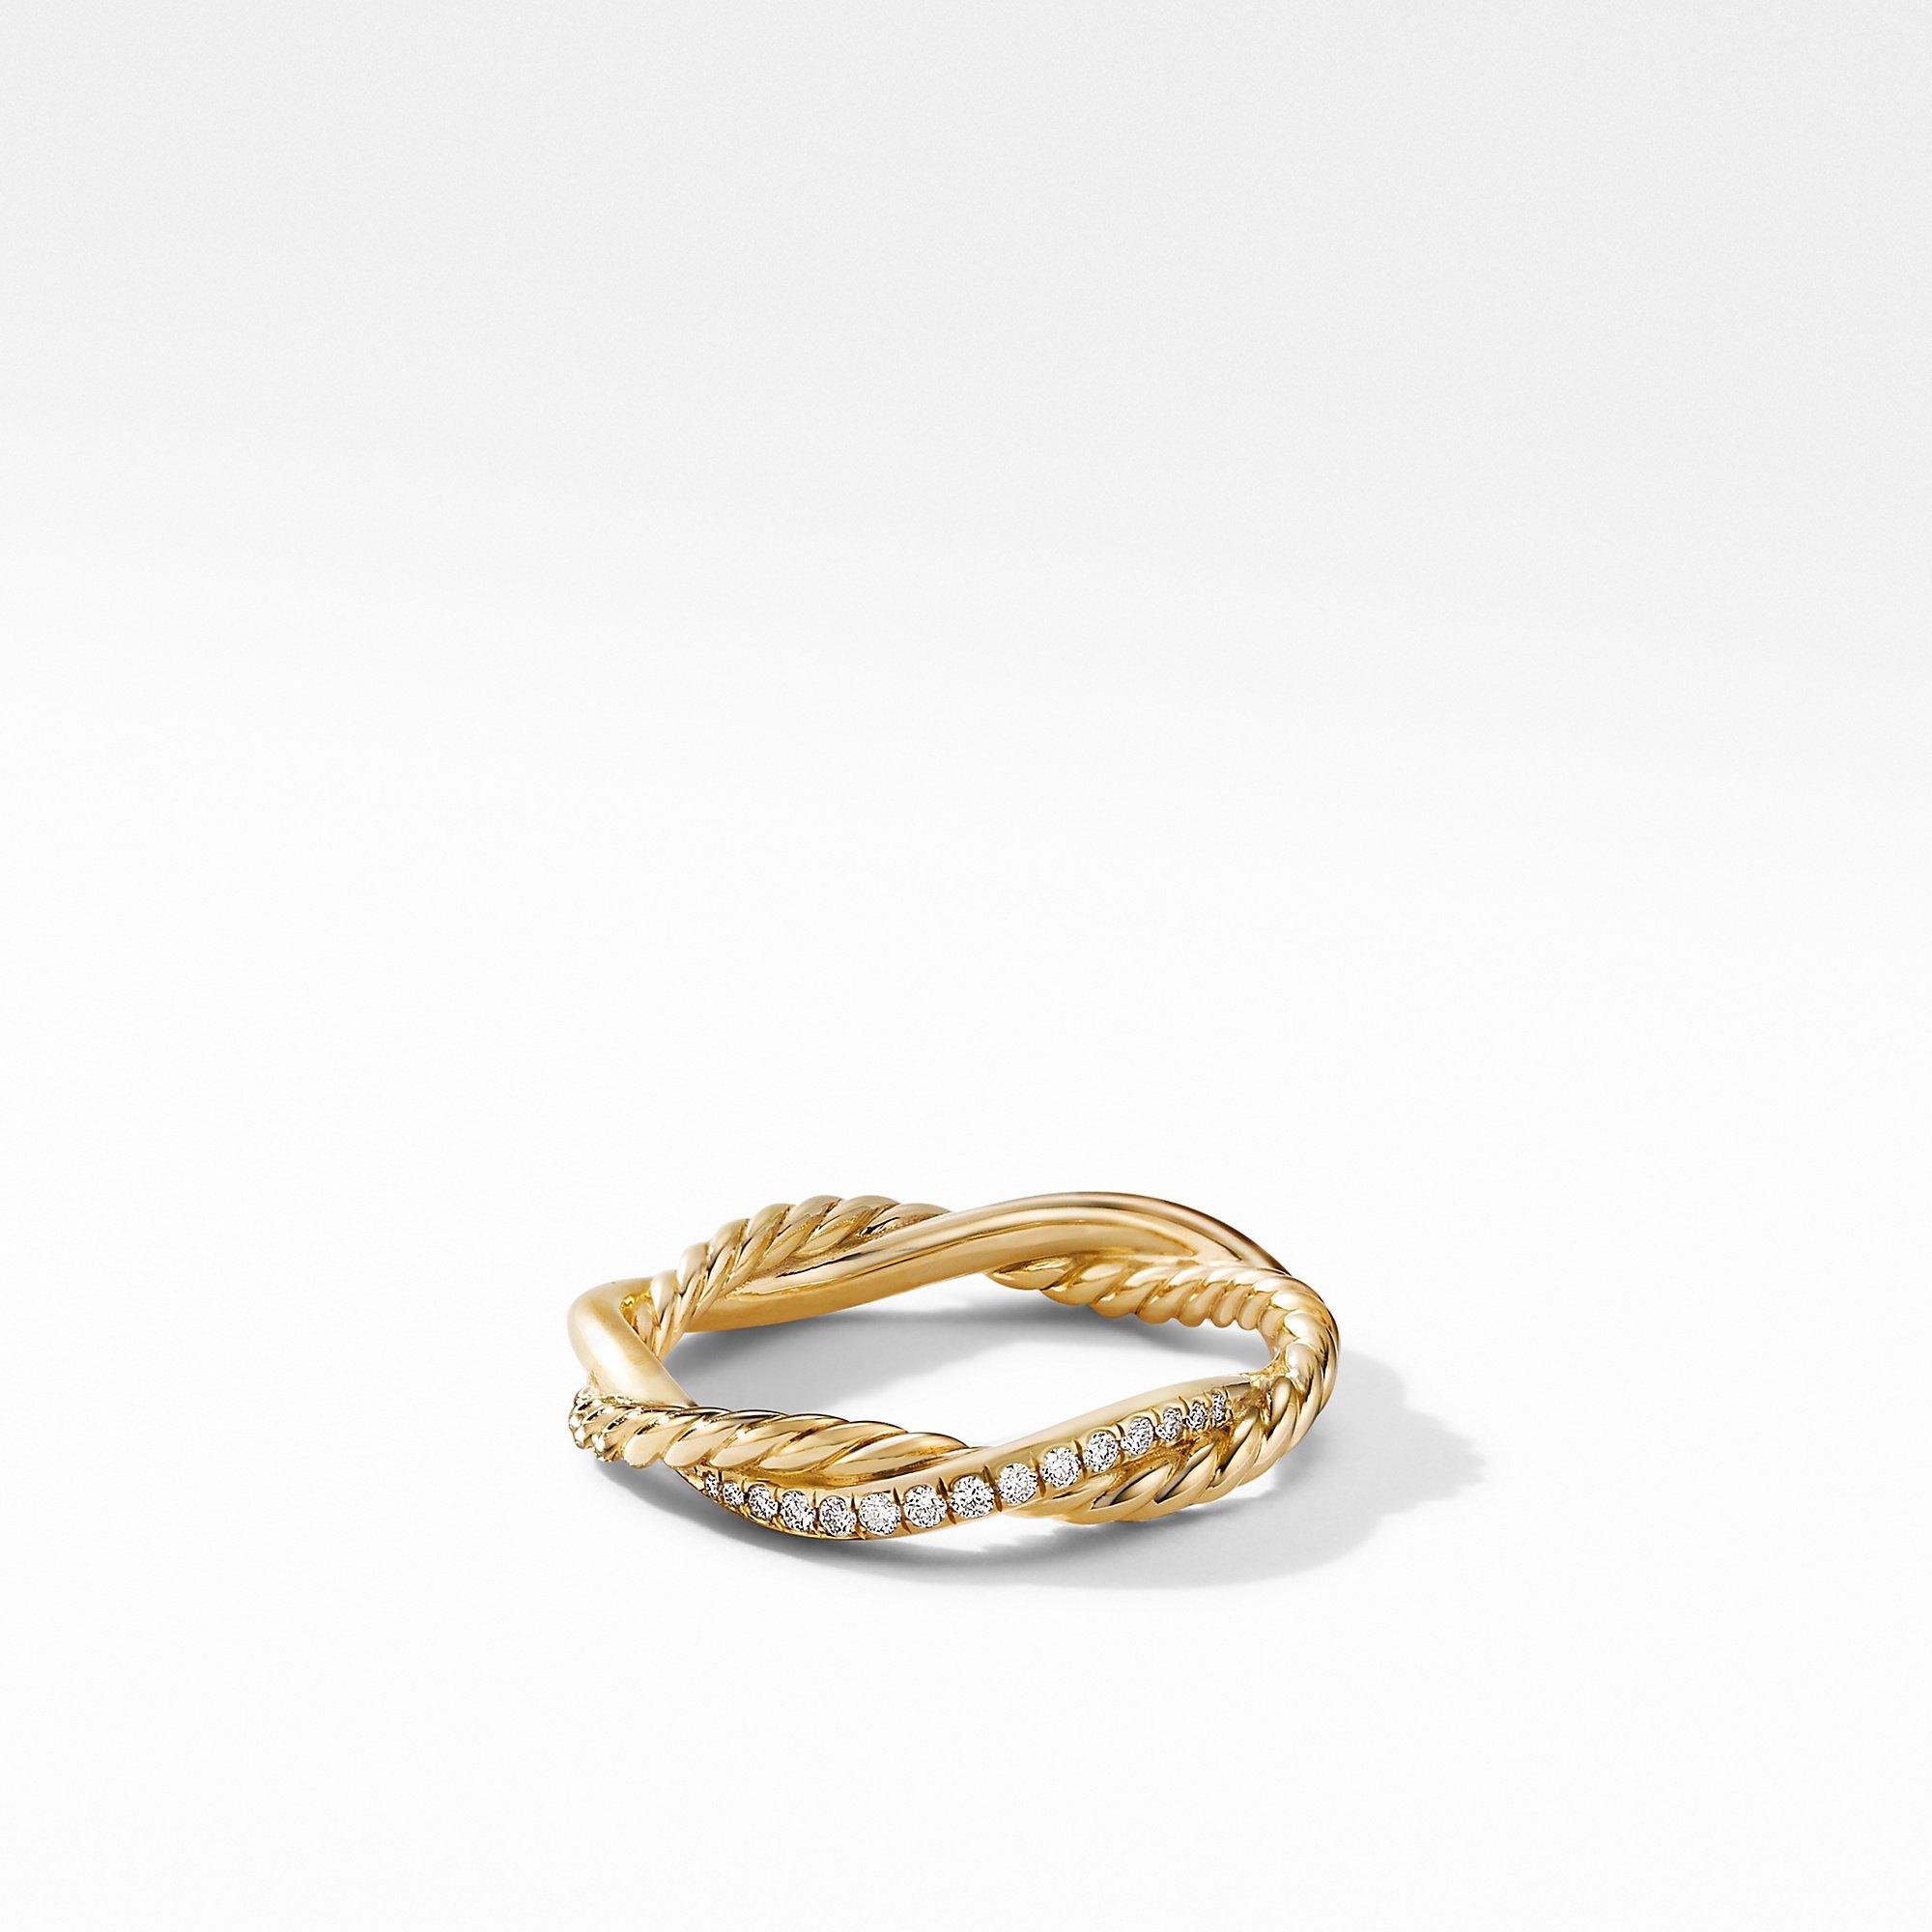 David Yurman Petite Infinity Twisted Ring in 18k Yellow Gold, size 8